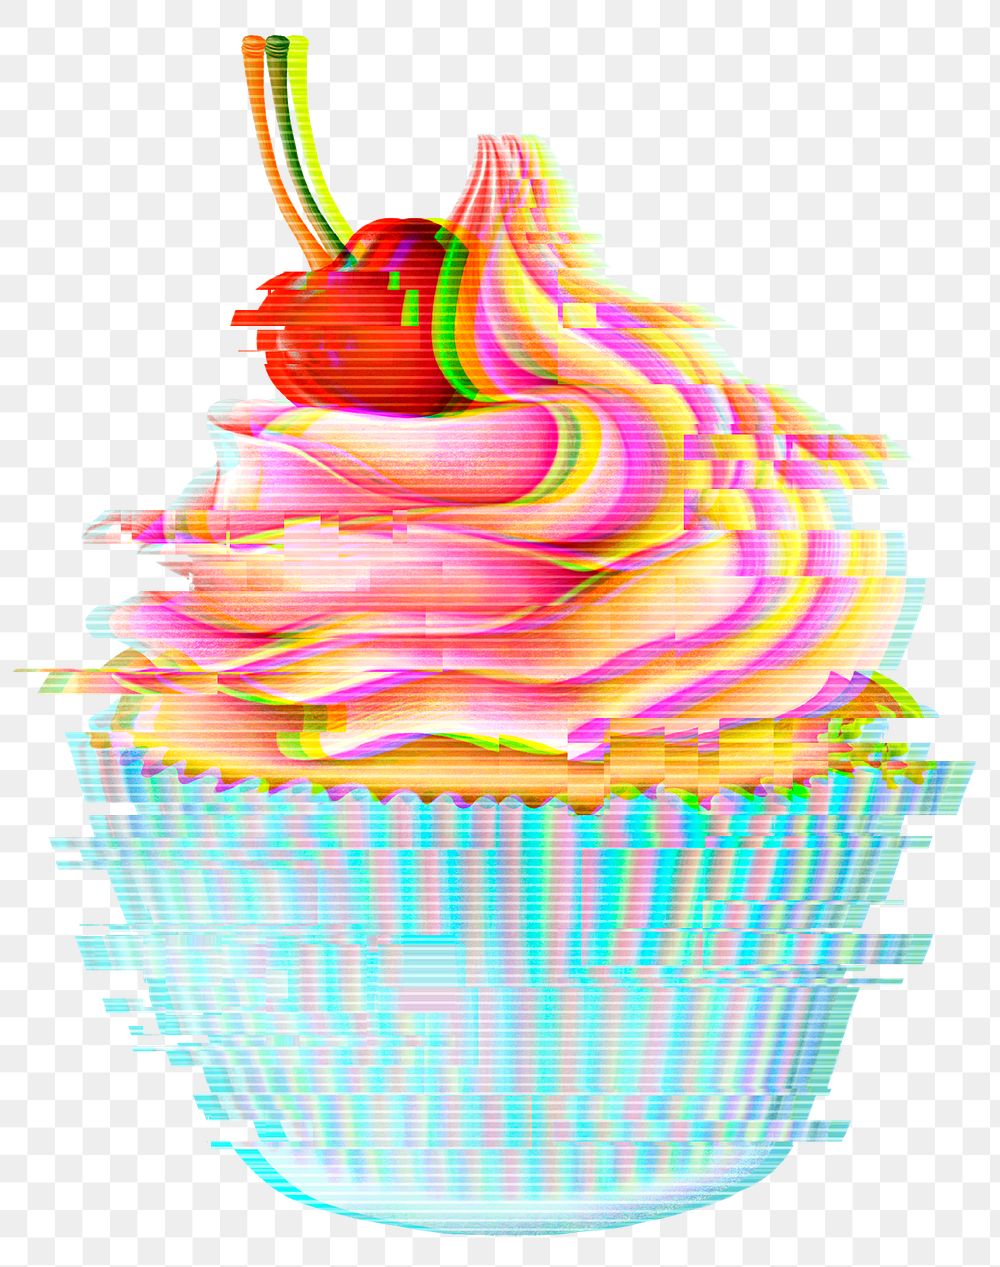 Cupcake with glitch effect sticker overlay